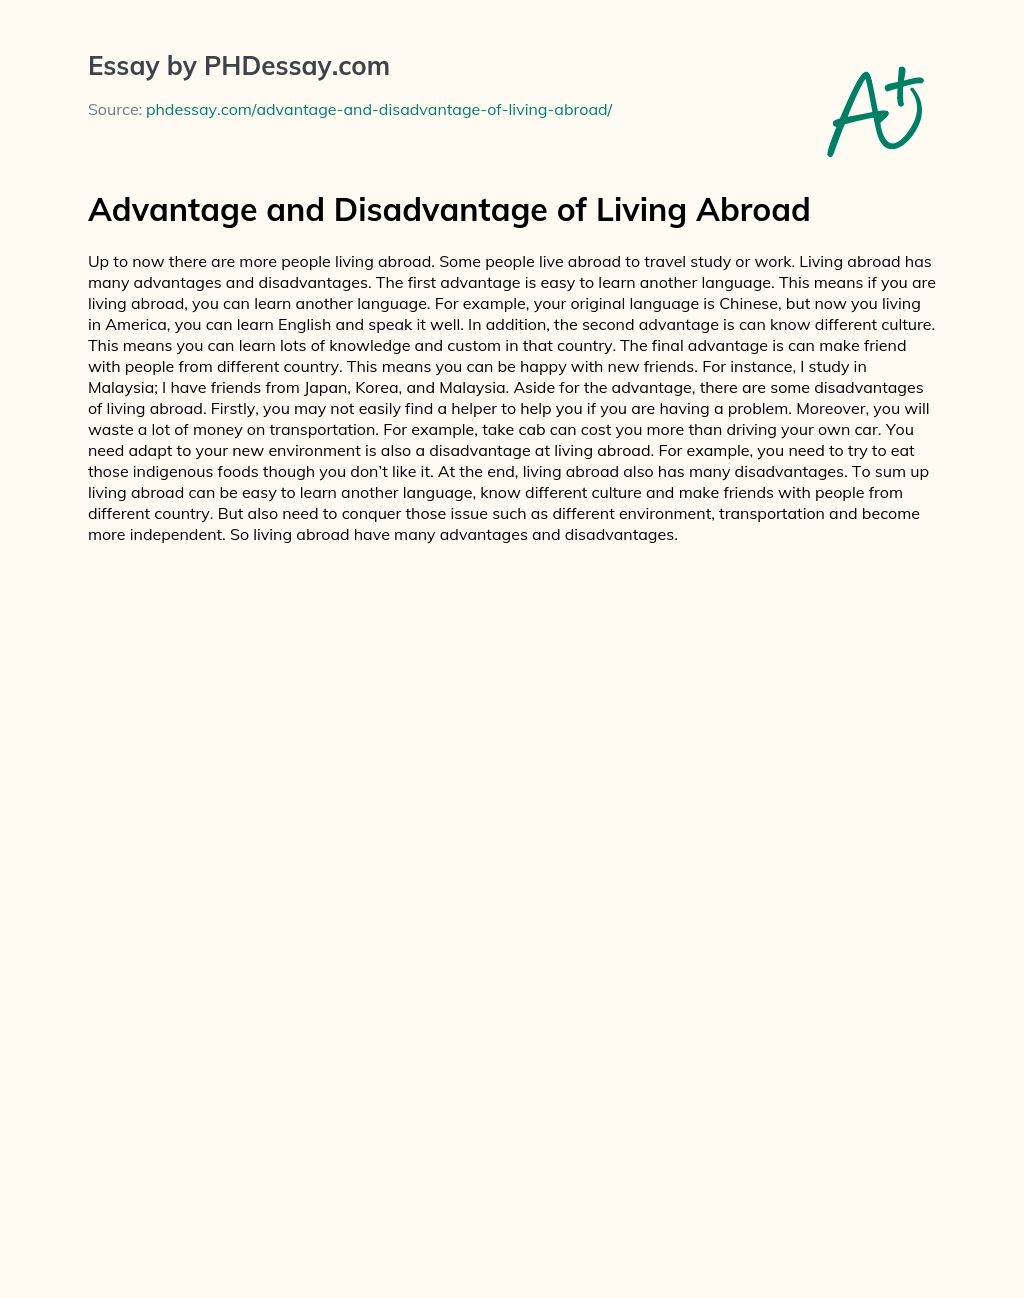 Advantage and Disadvantage of Living Abroad essay